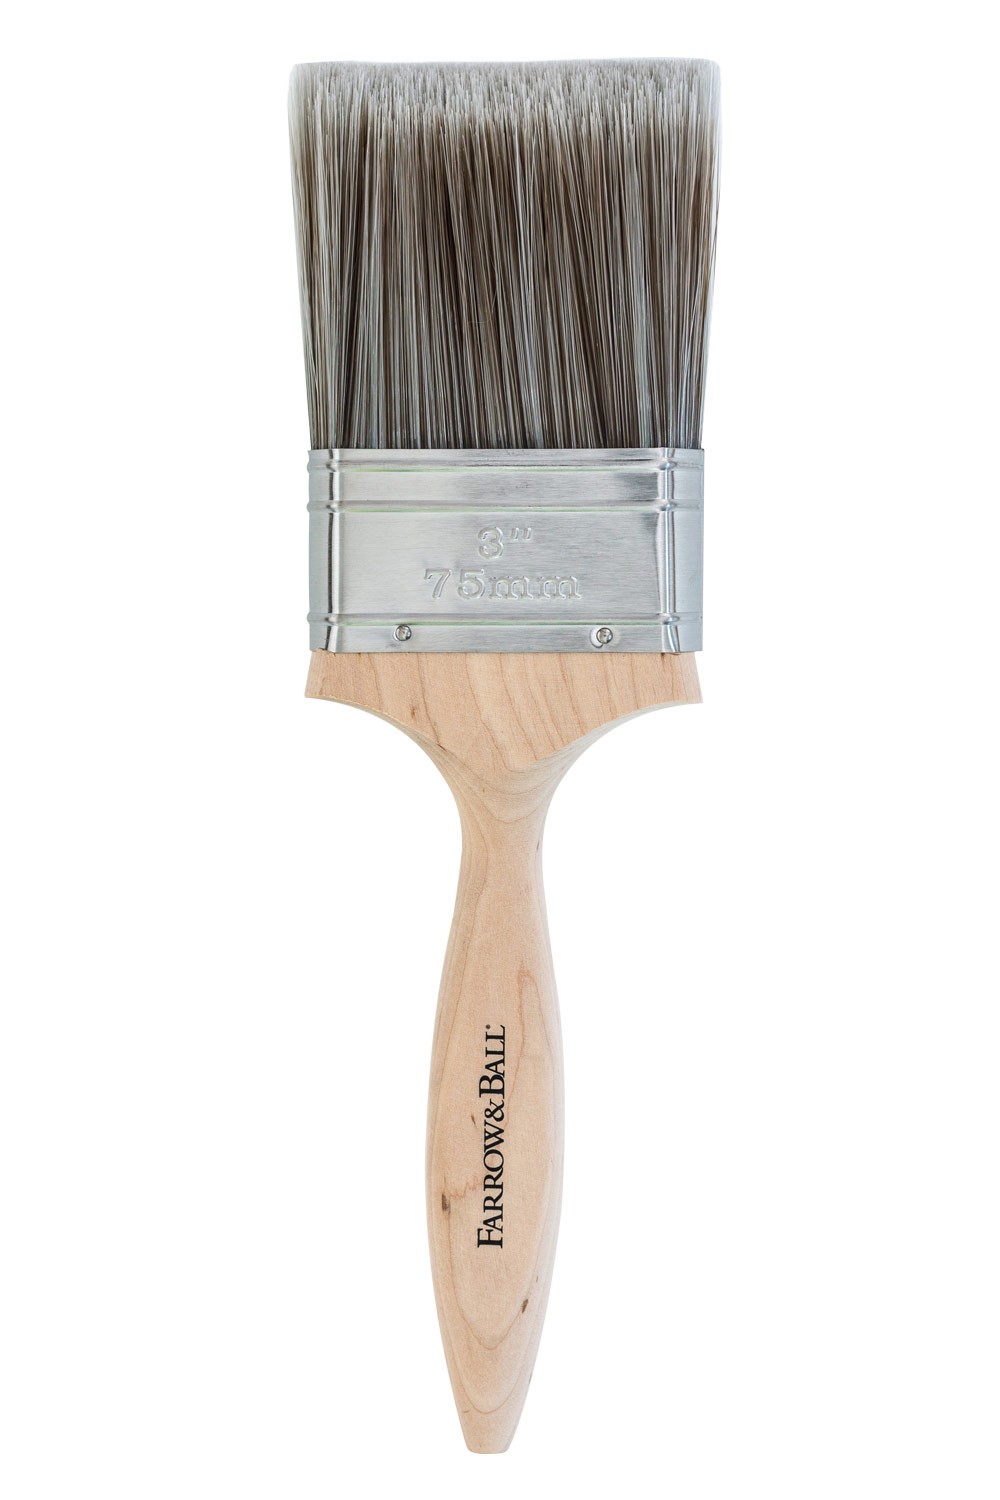 3-inch-paint-brush | Sarmazian Brothers Flooring